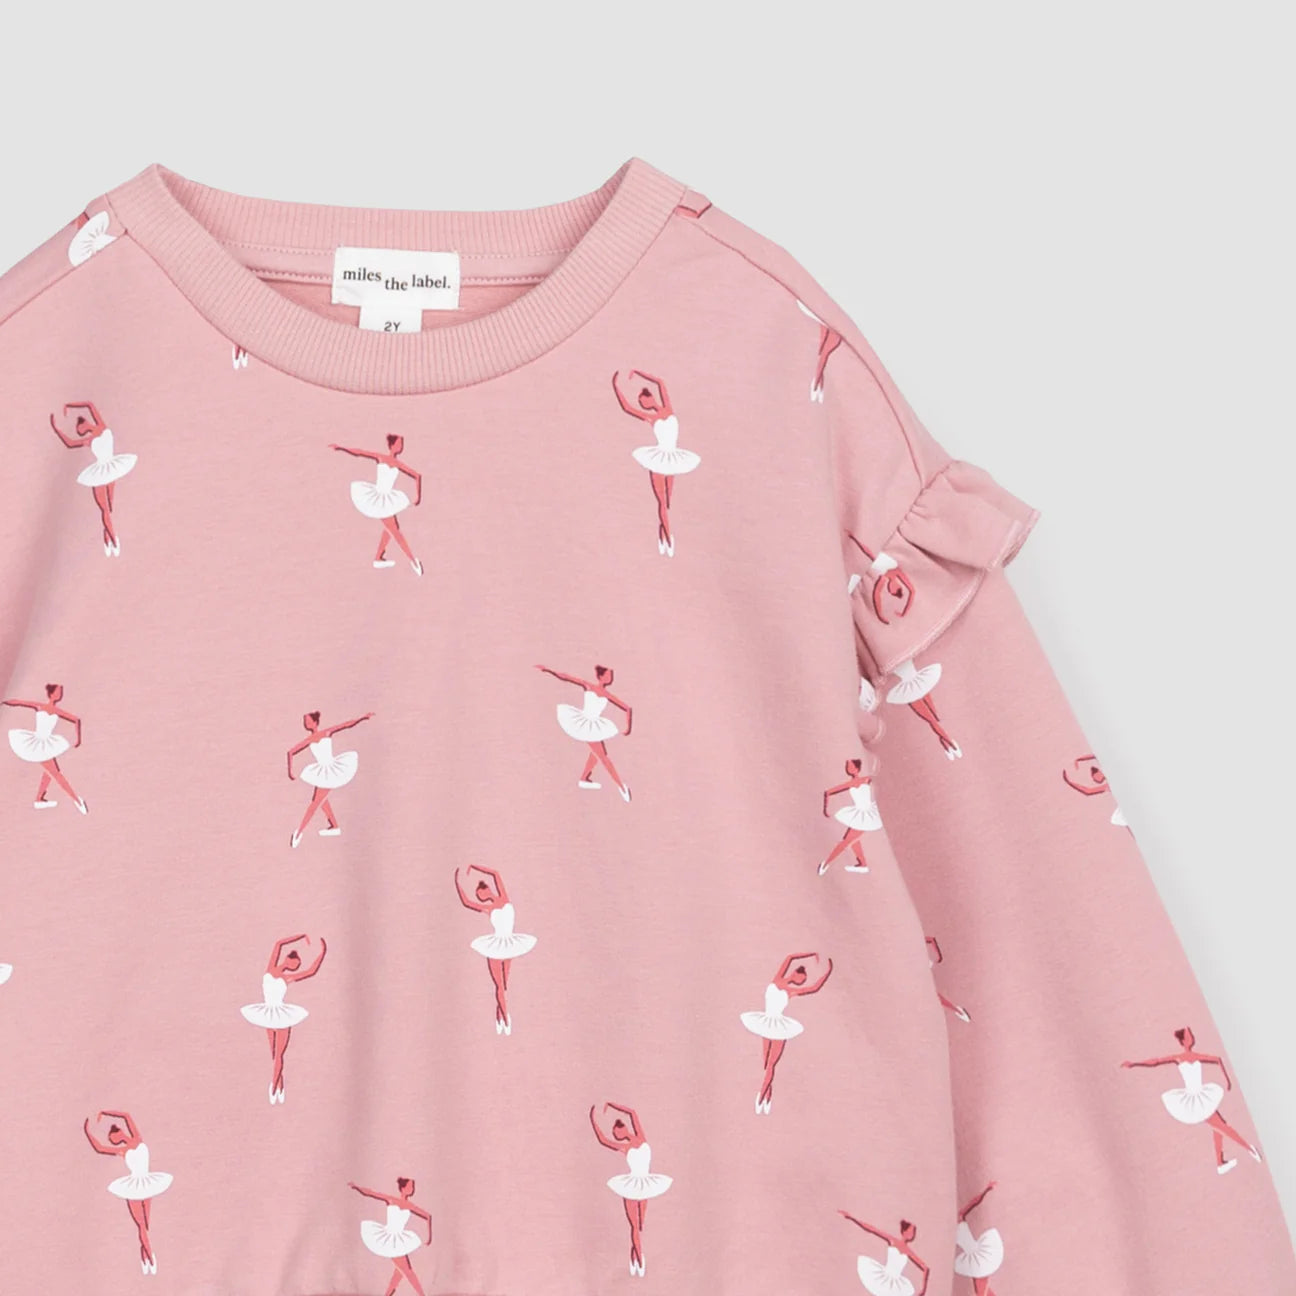 Ballerina Print on Rose Sweatshirt